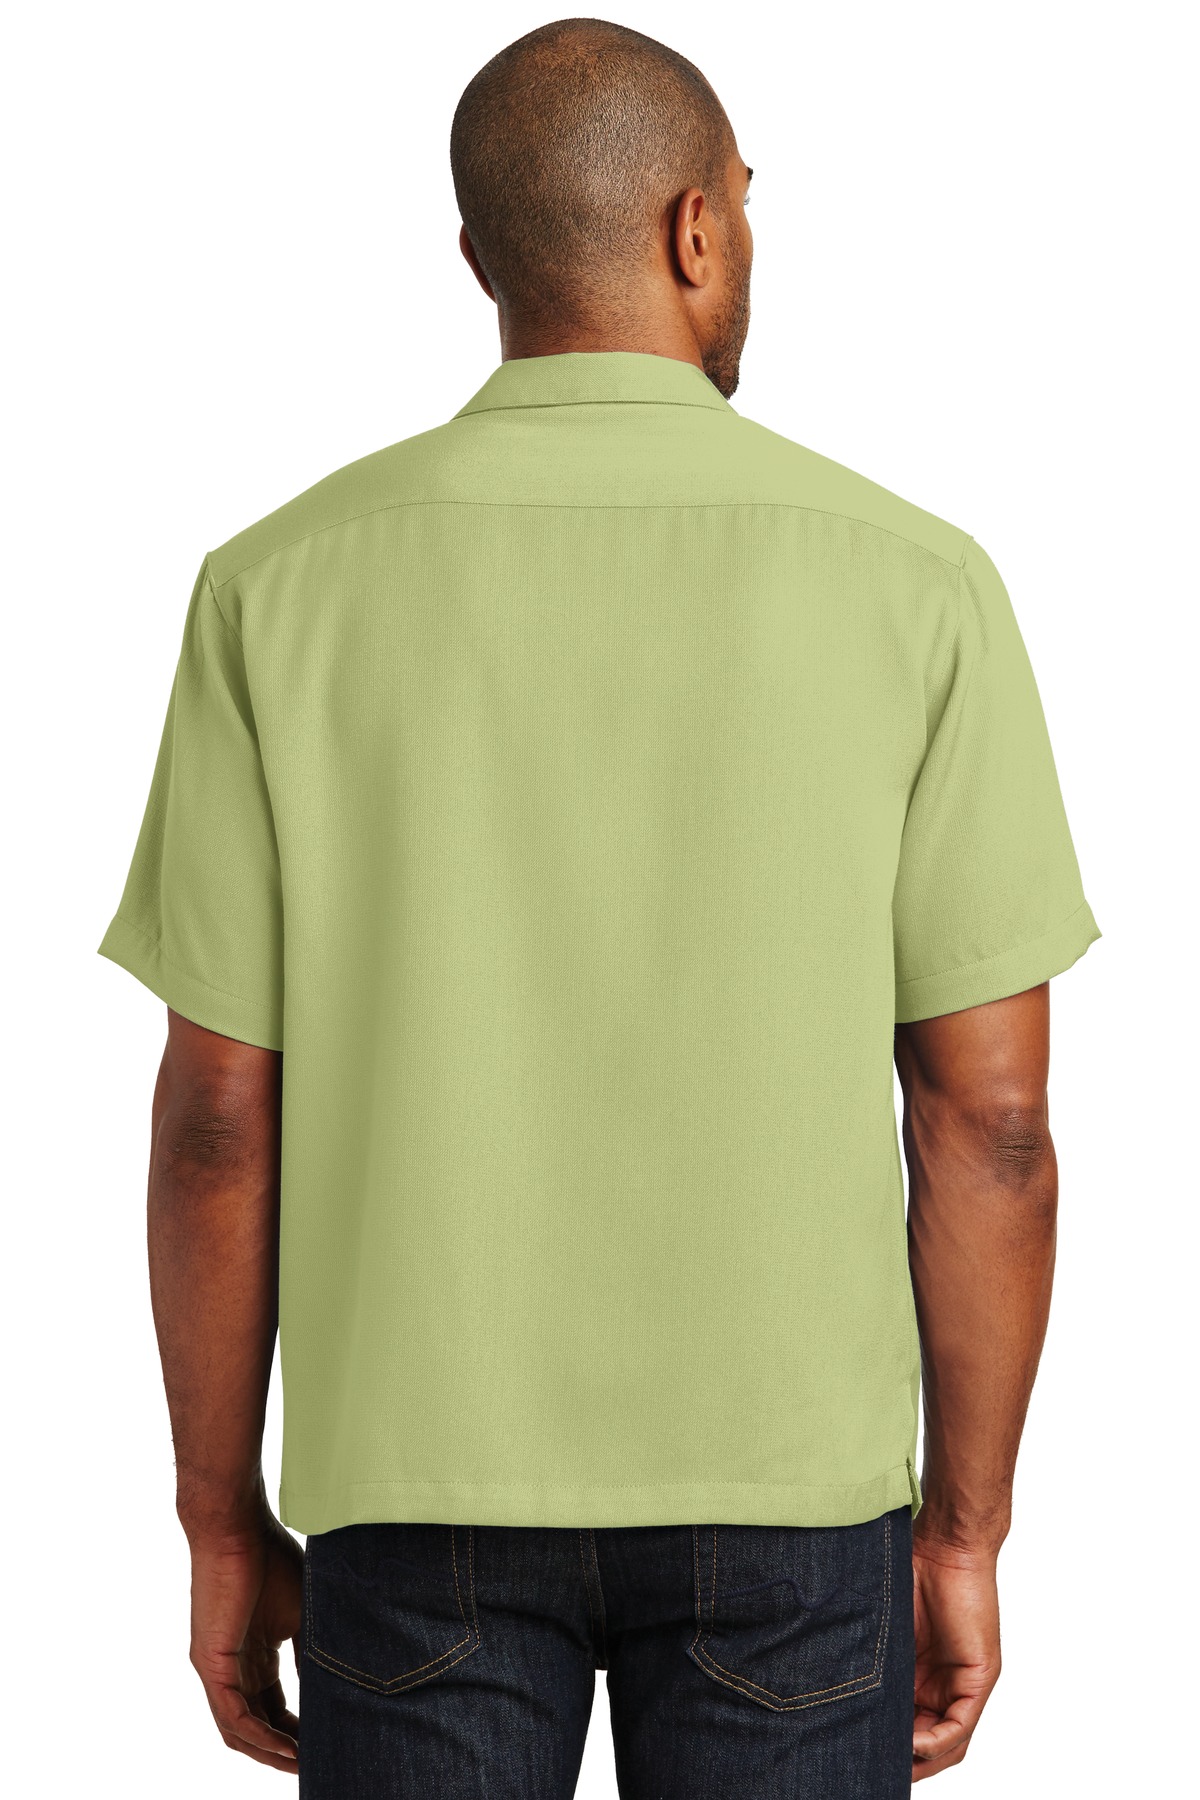 Port Authority Men's Easy Care Camp Shirt